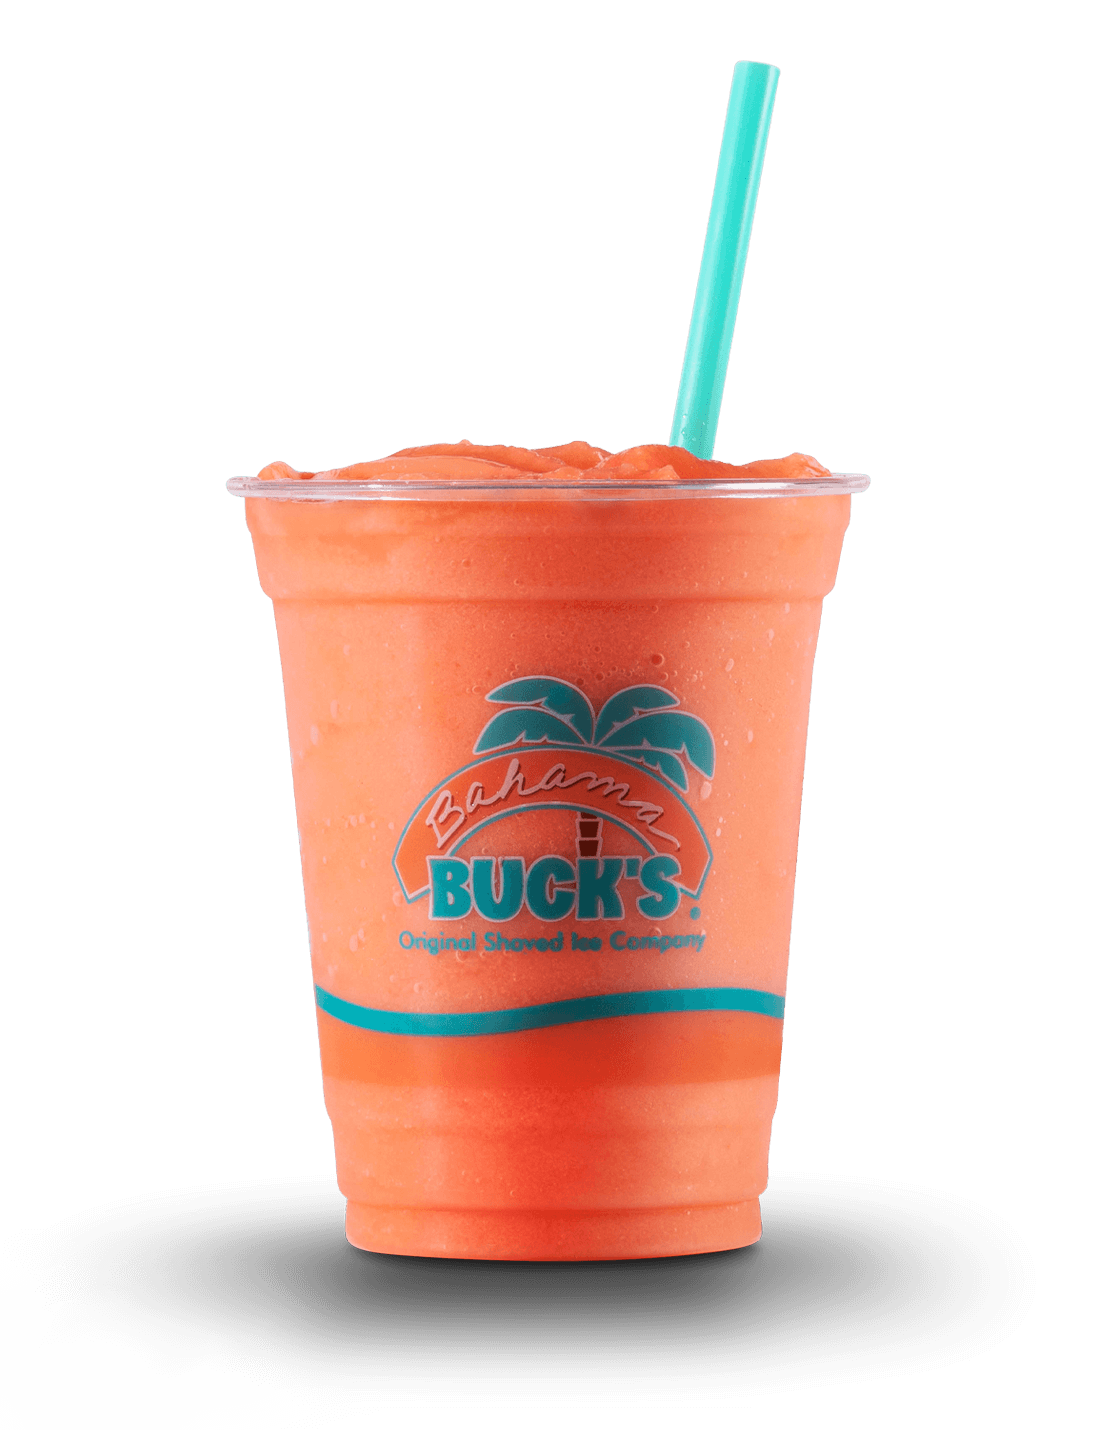 Bahama-Bucks-Watermelon-Mango-Smoothie